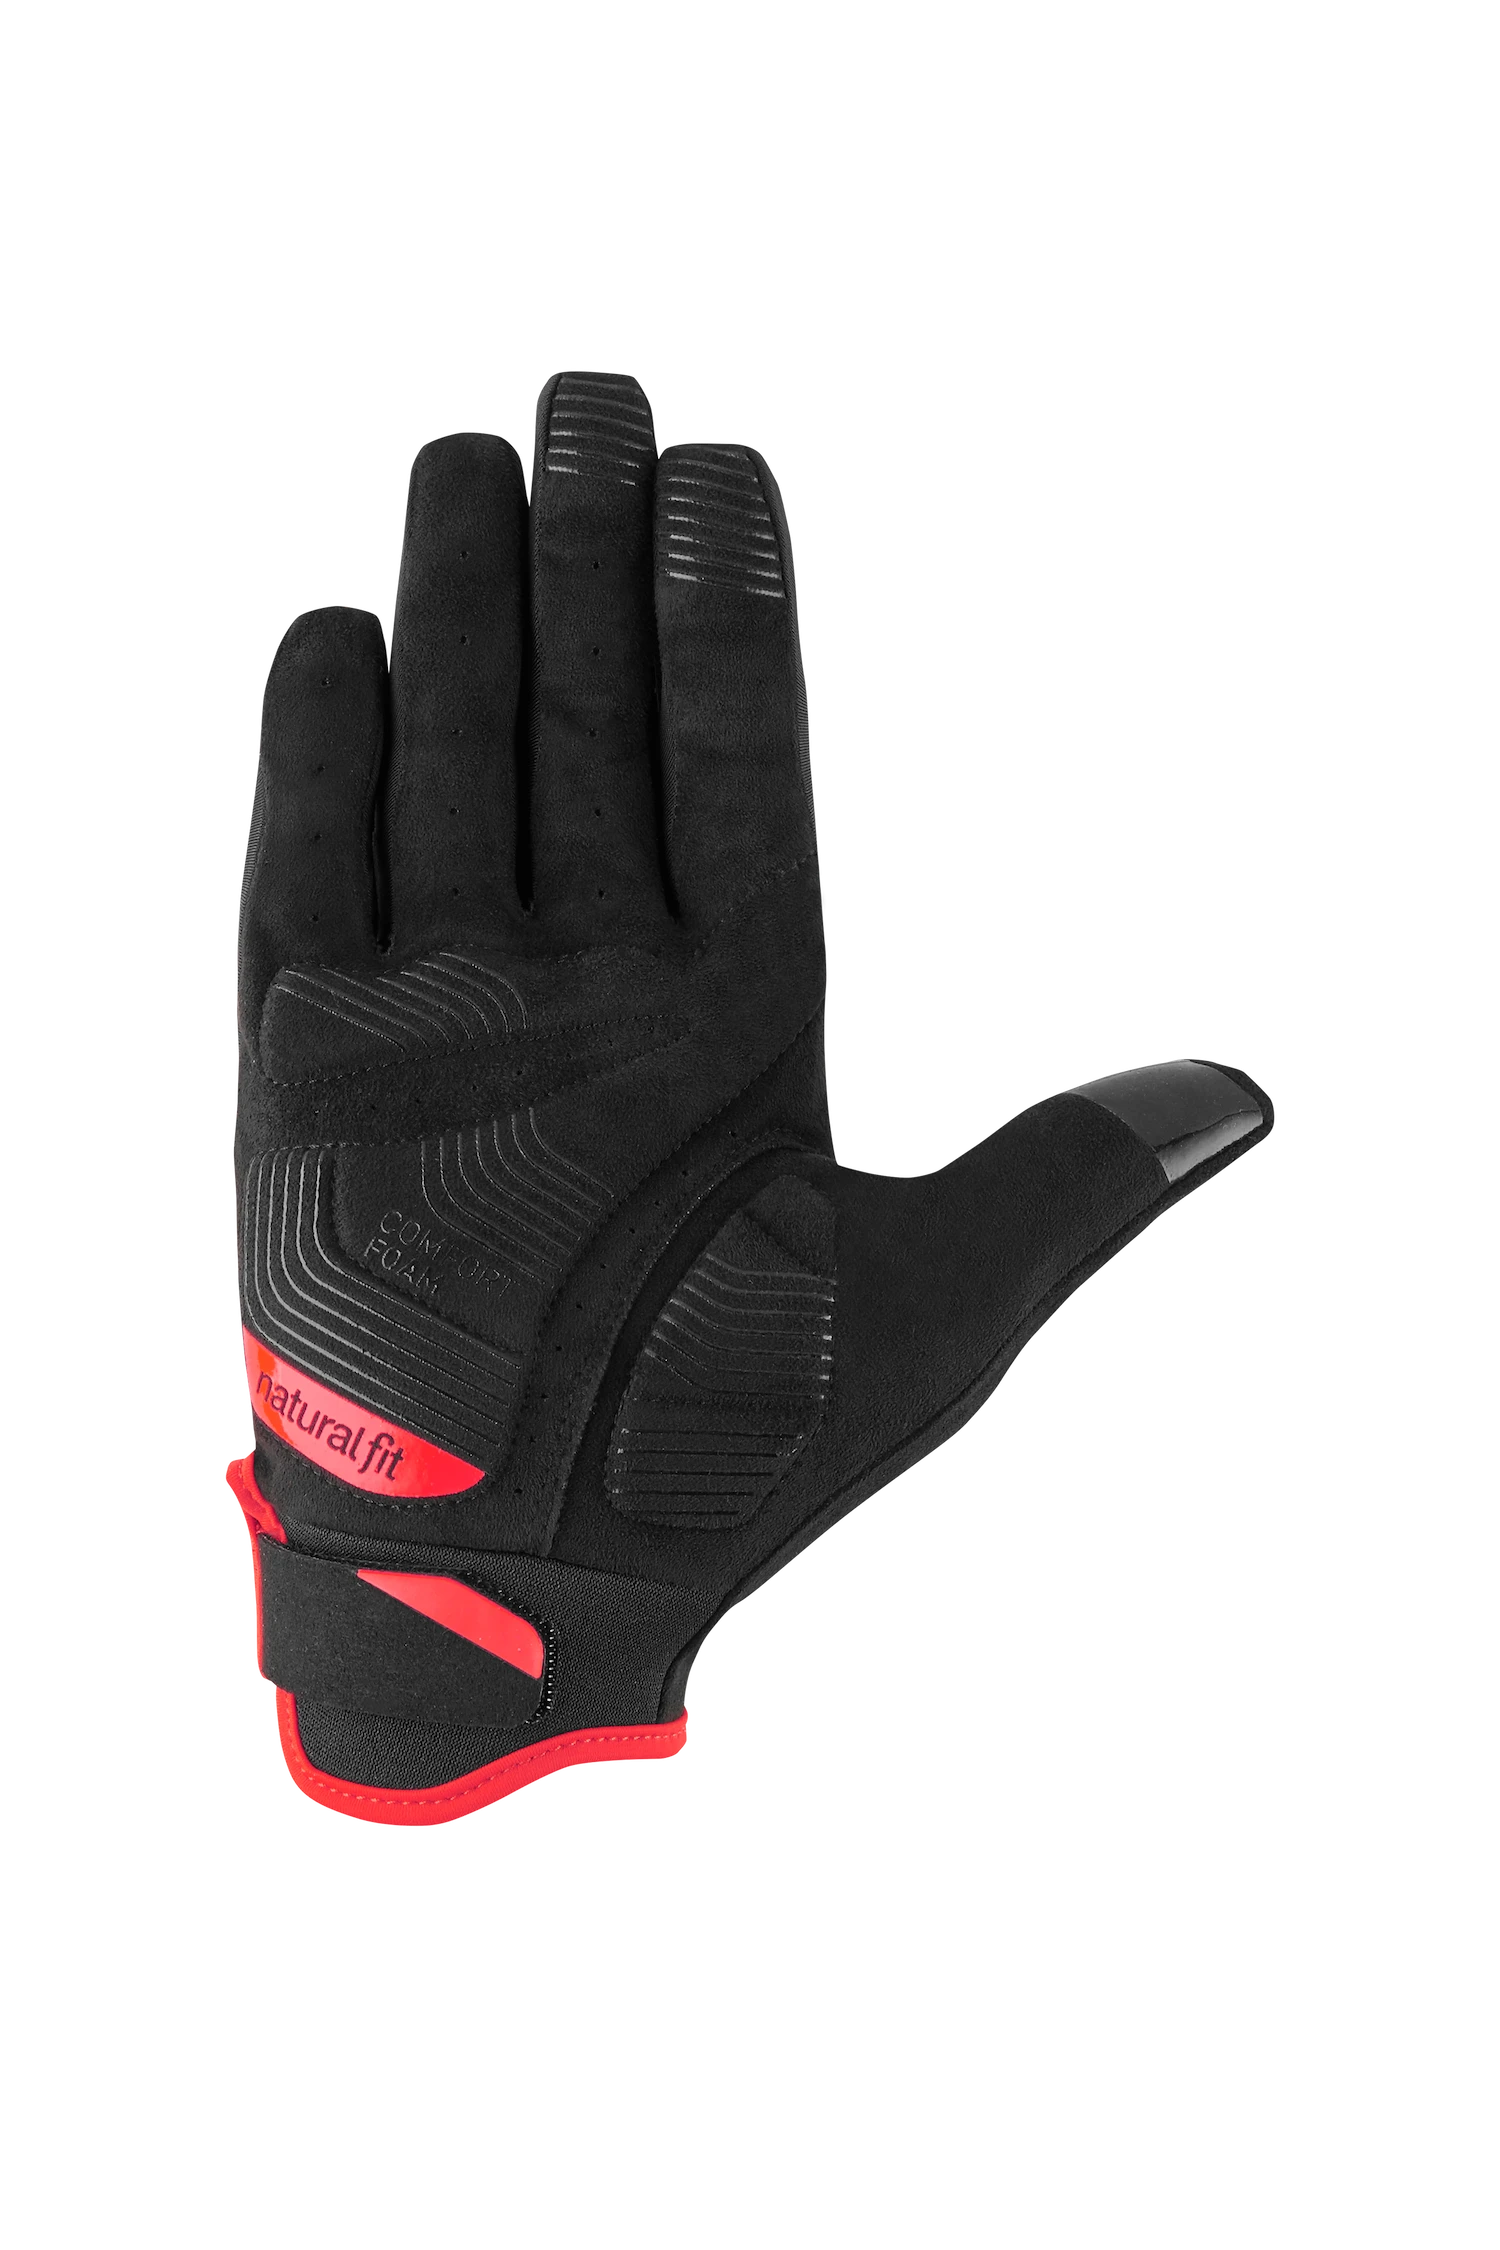 CUBE Handschuhe langfinger X NF red